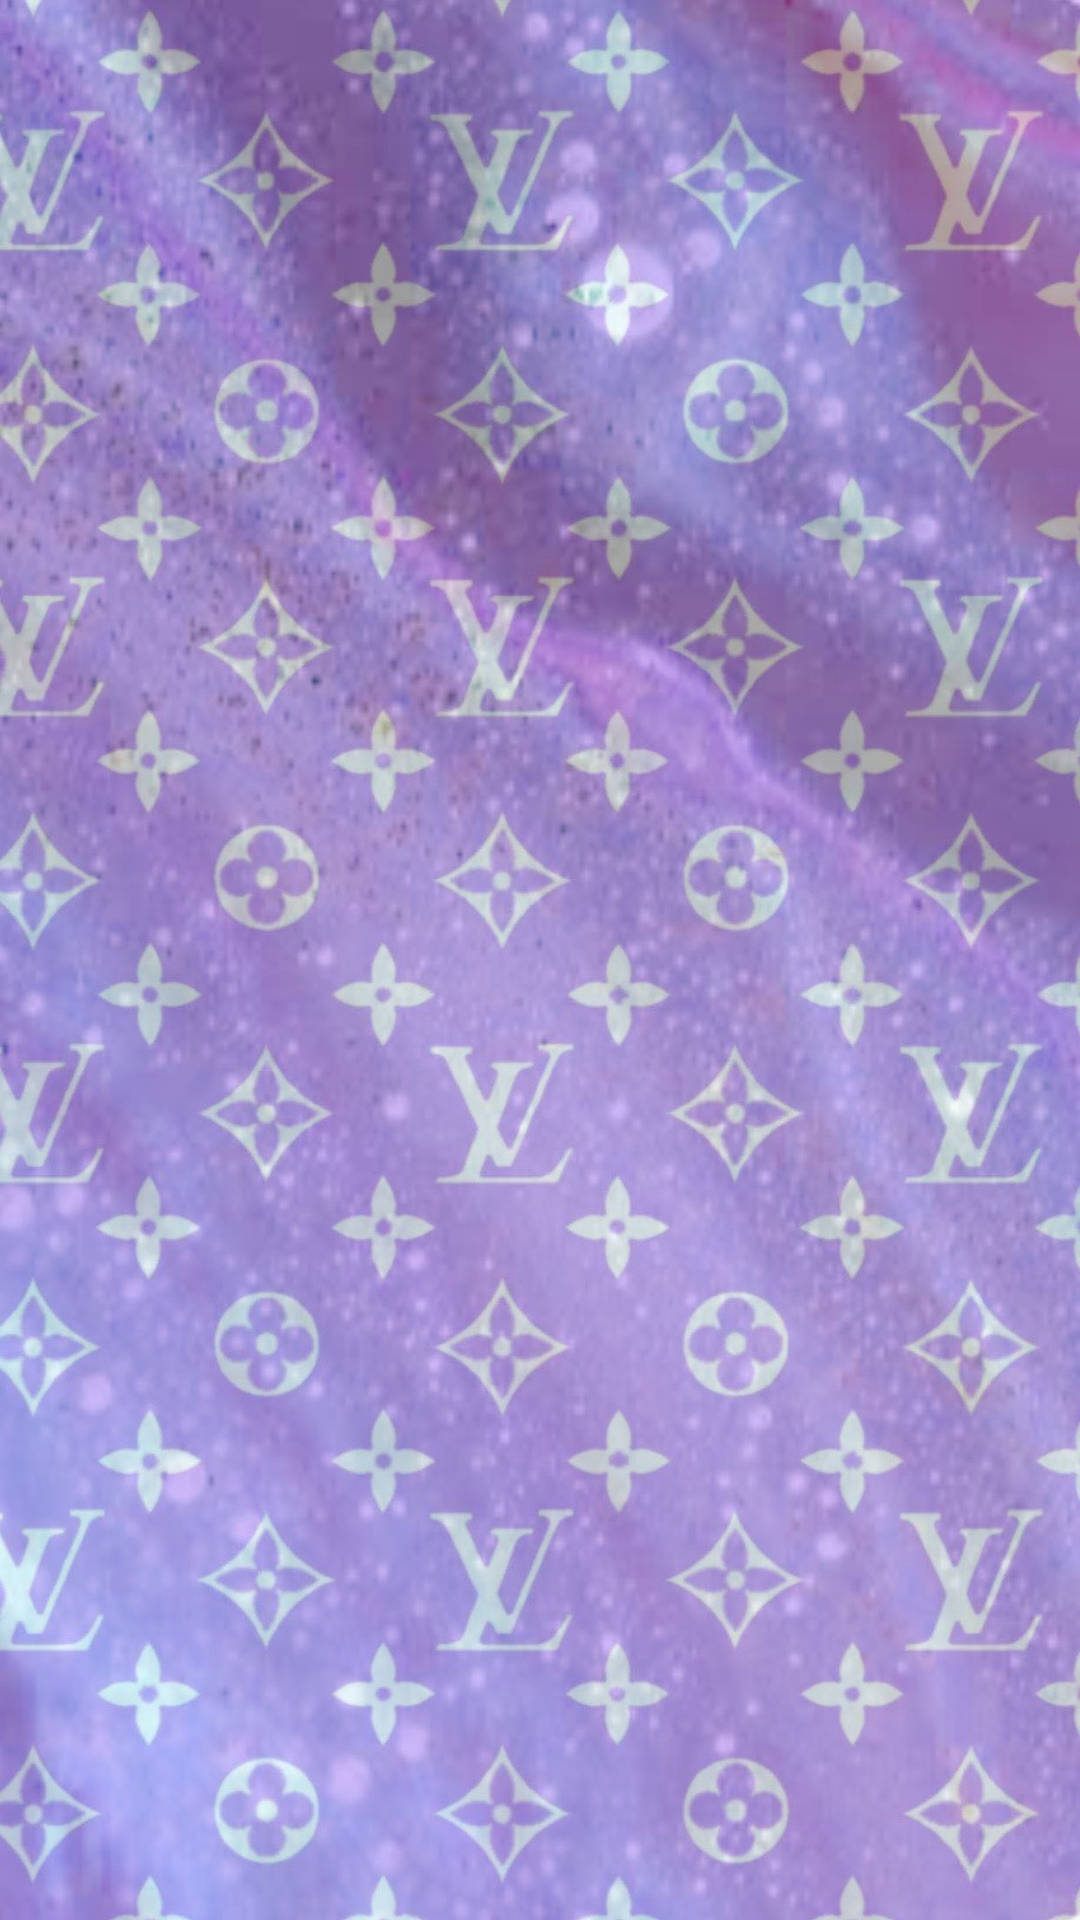 Free download Wallpaper Louis Vuitton Purple Aesthetic Butterfly